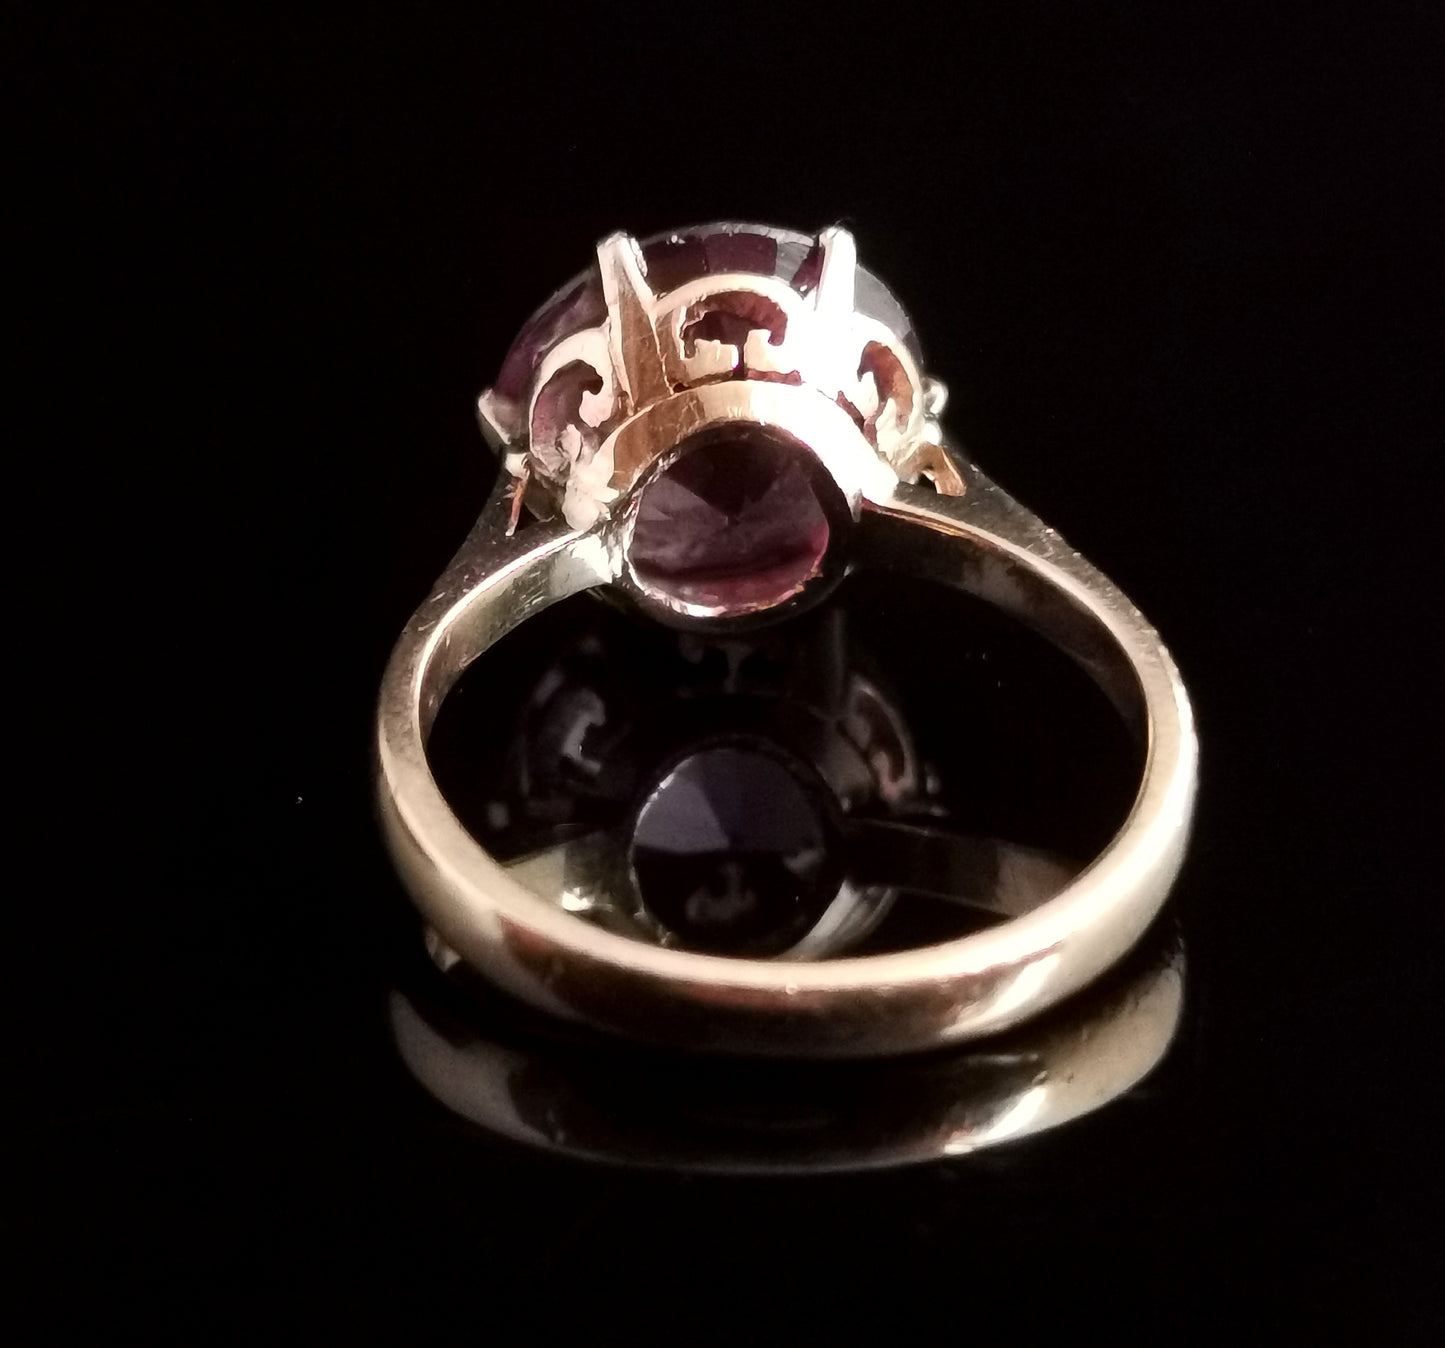 Vintage Colour change sapphire cocktail ring, 14ct gold, c1940s